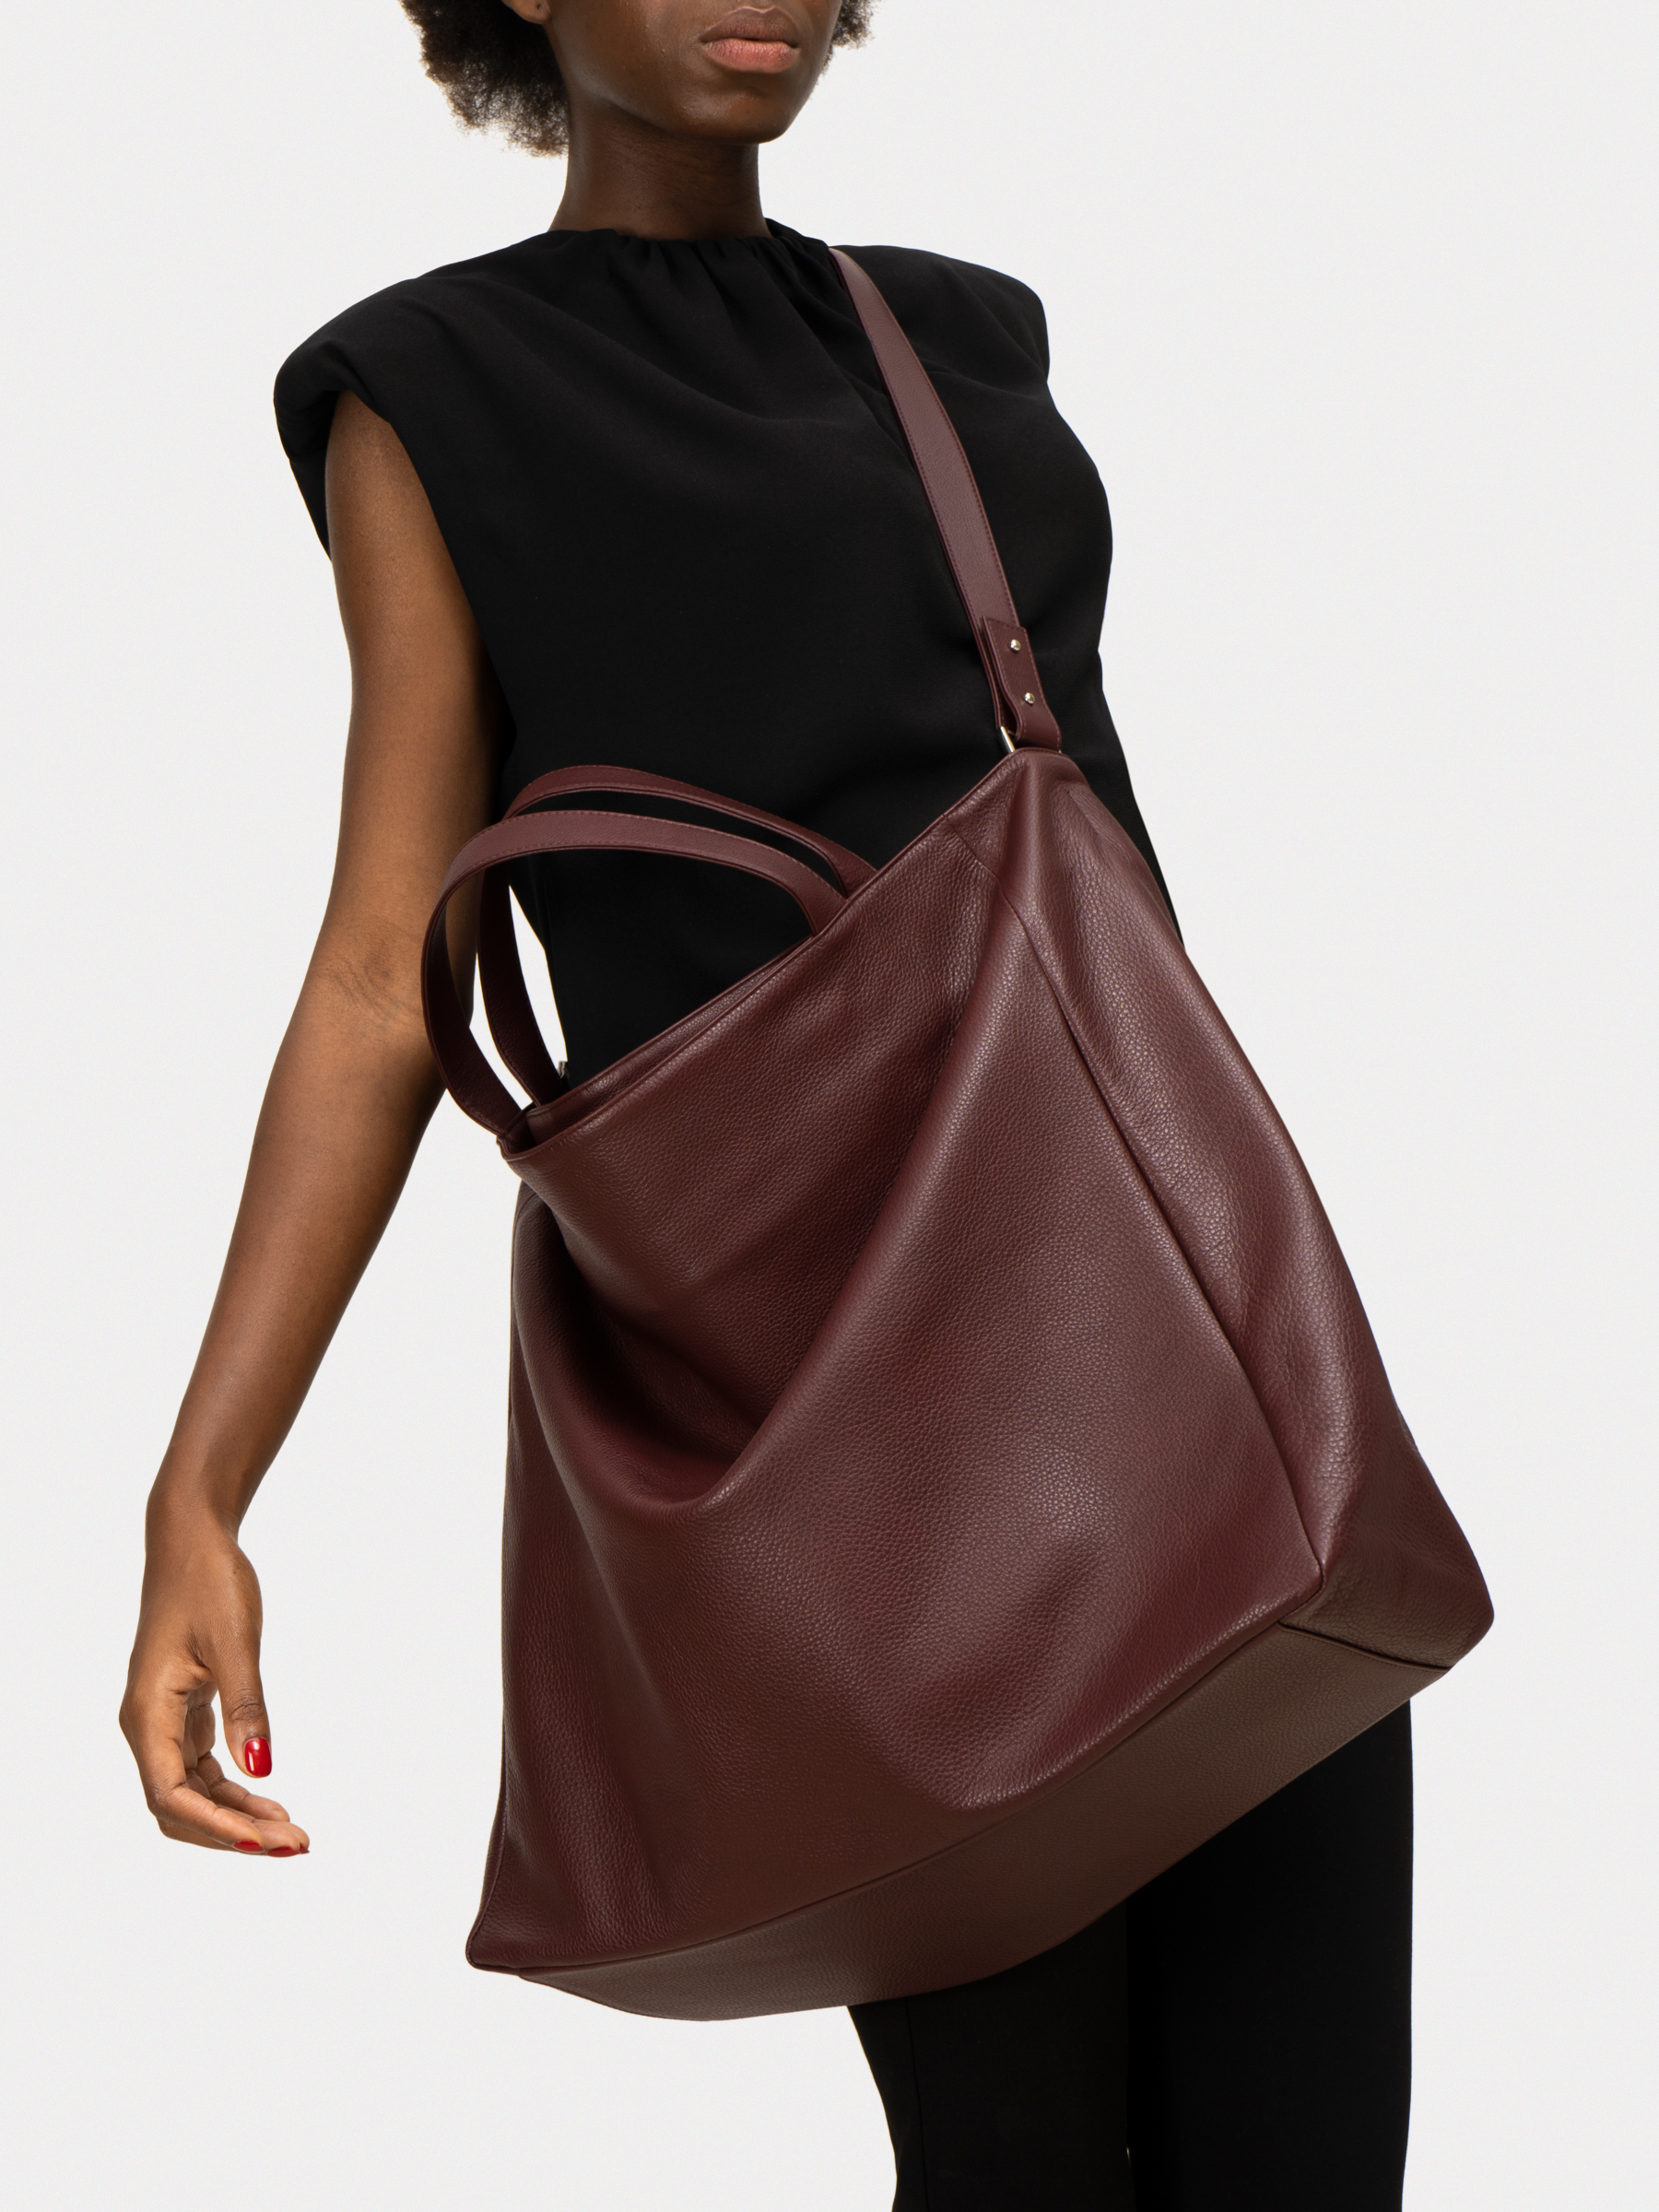 FABER TWO shoulder bag in burgundy calfskin leather | TSATSAS